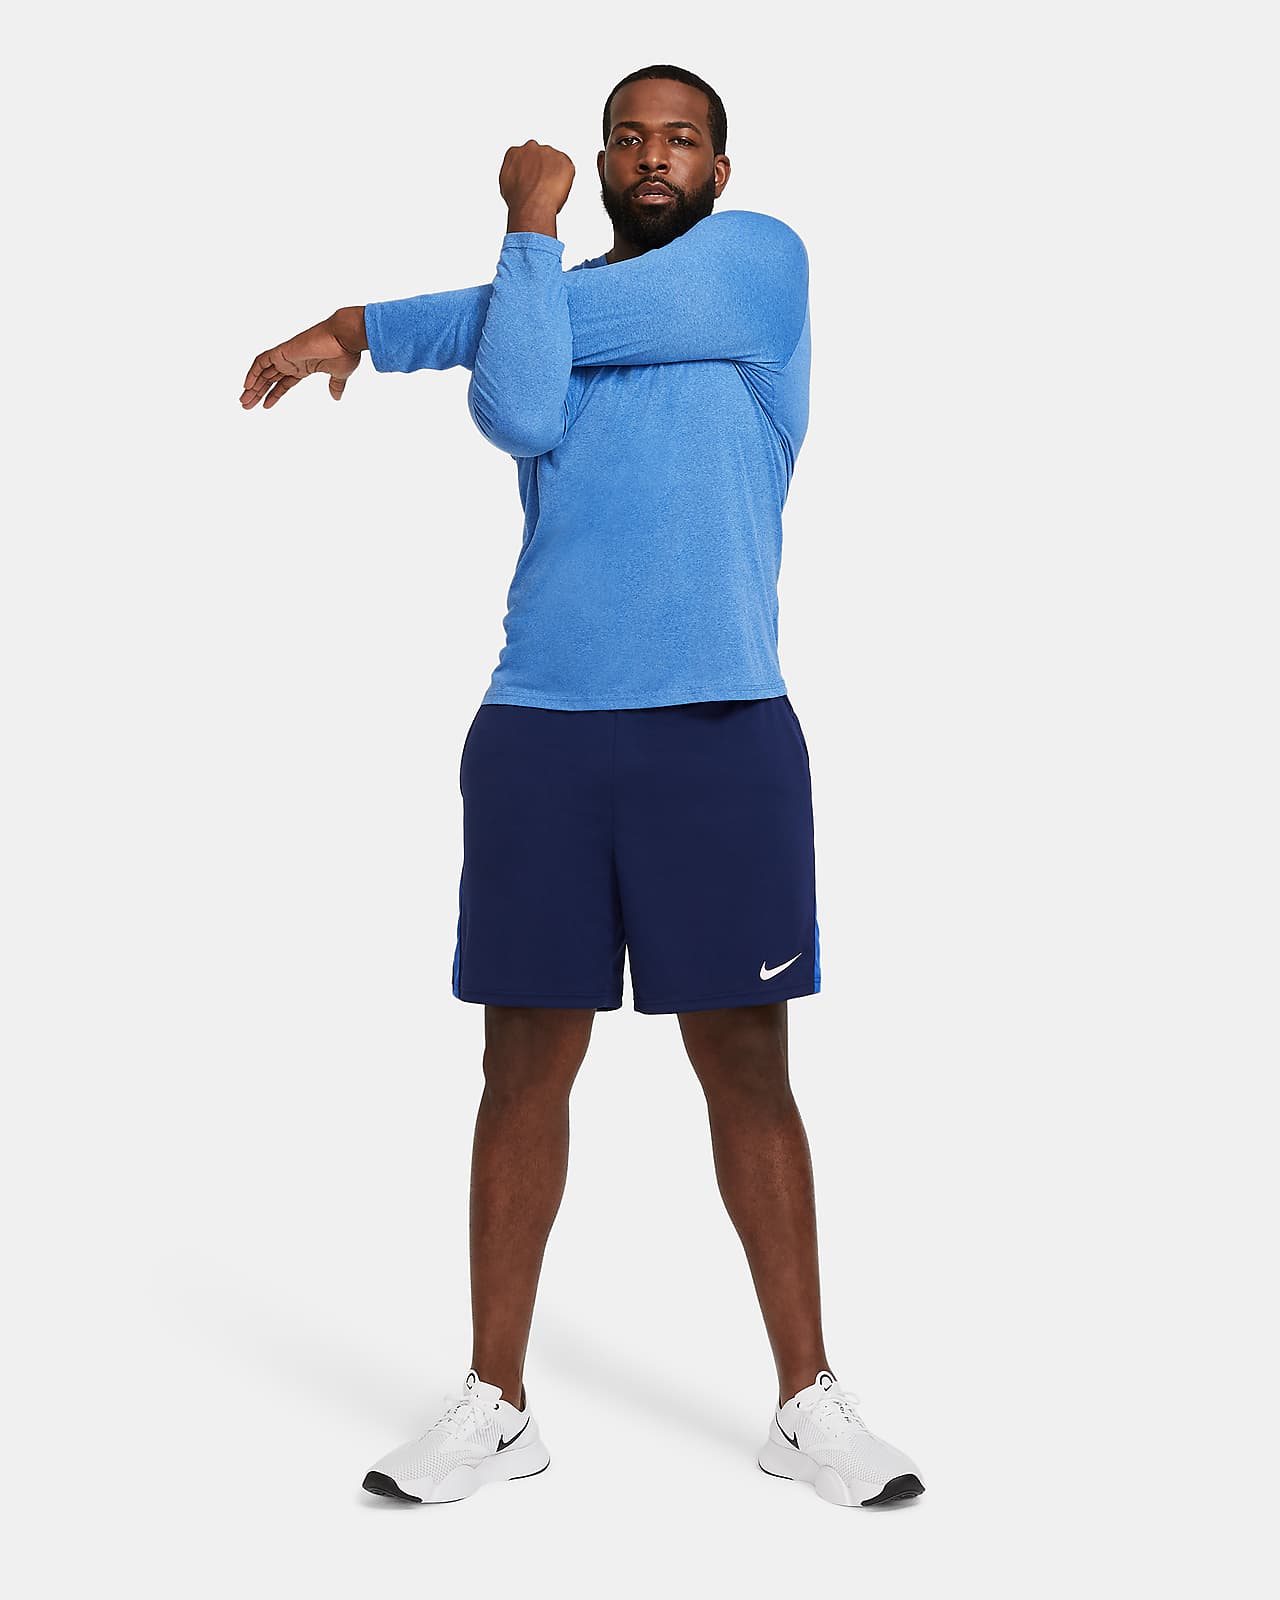 Pensar en el futuro silencio Miedo a morir Nike Dri-FIT Men's Knit Training Shorts. Nike.com